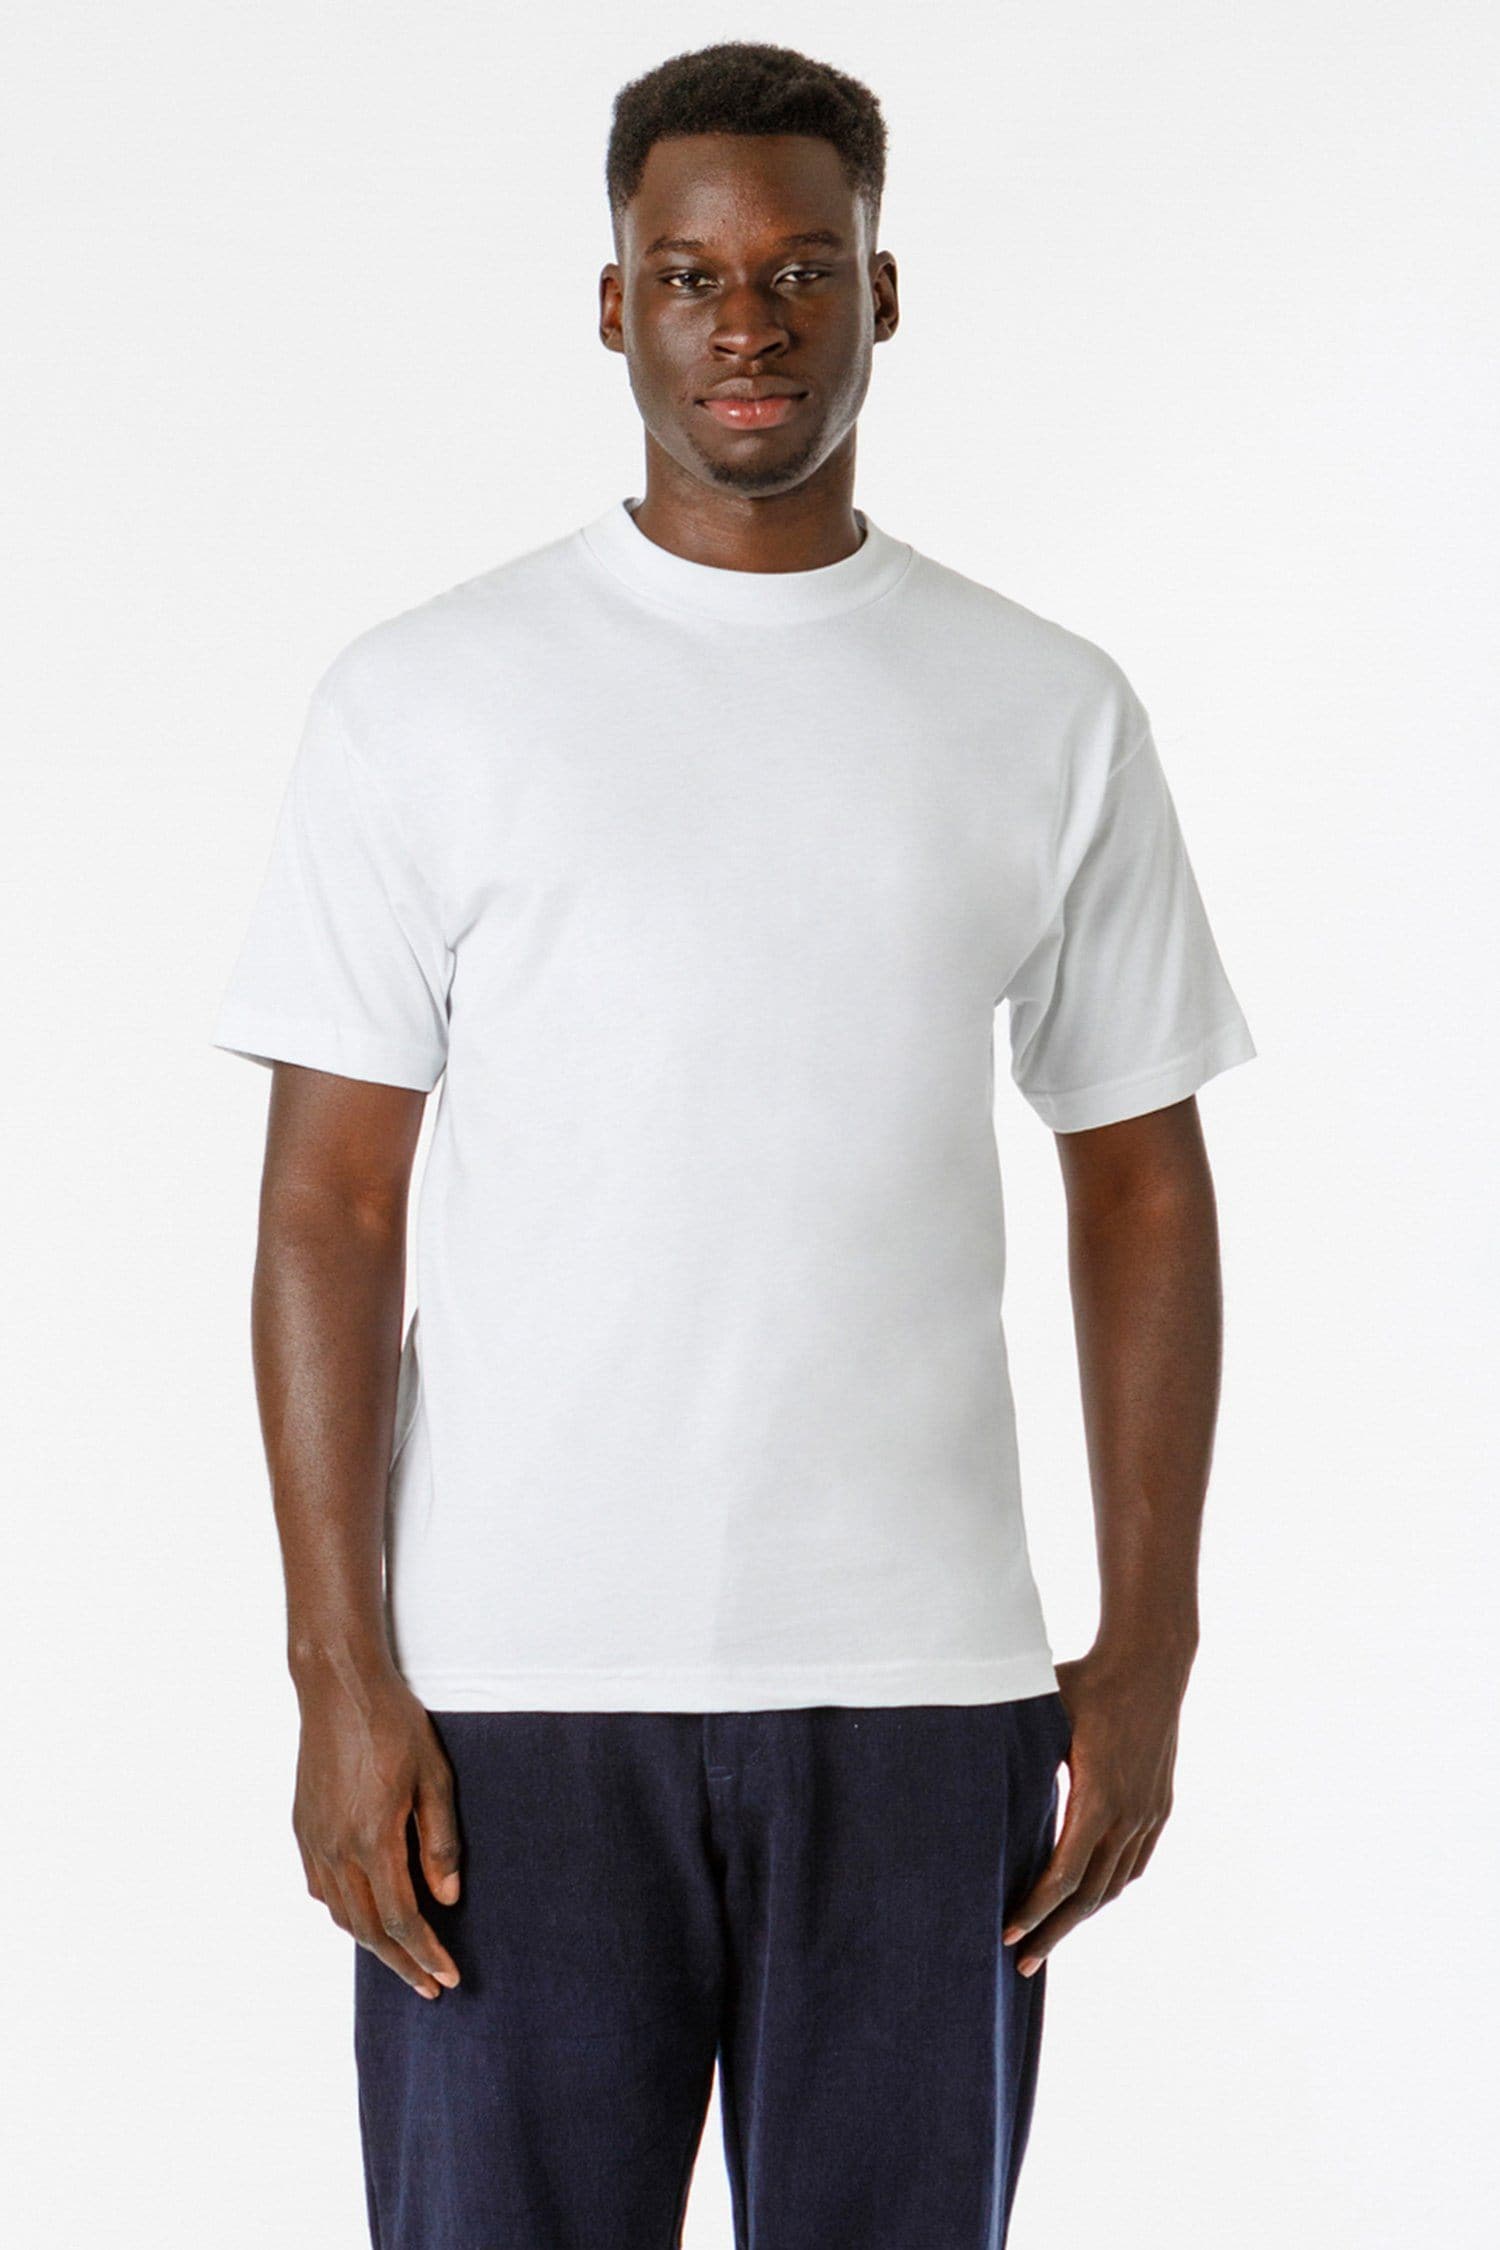 White Crew Neck Tee, T-Shirts For Men